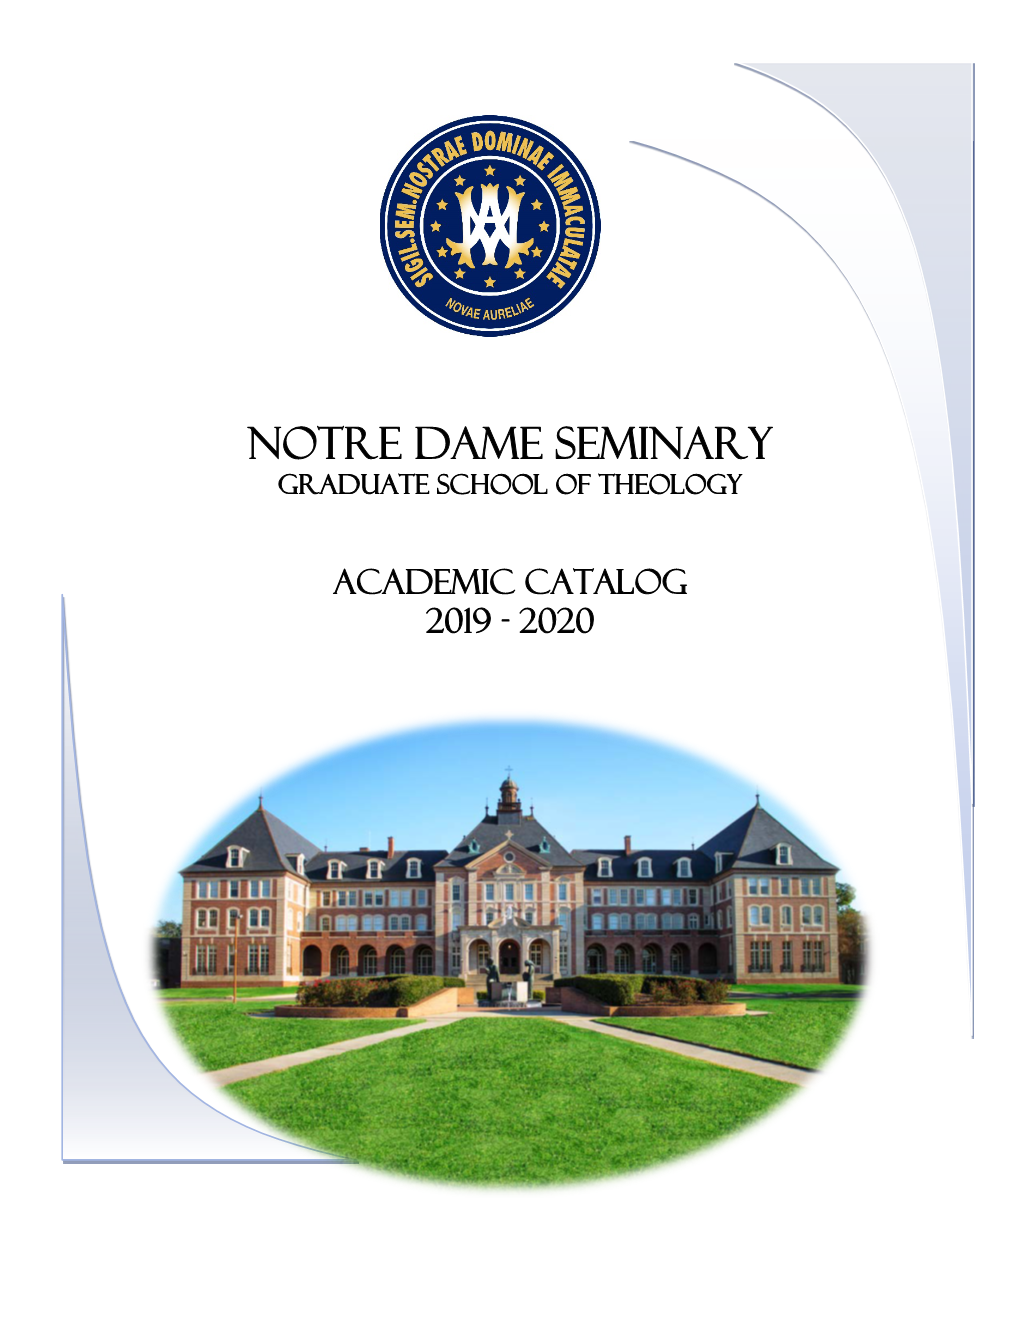 Notre Dame Seminary Graduate School of Theology